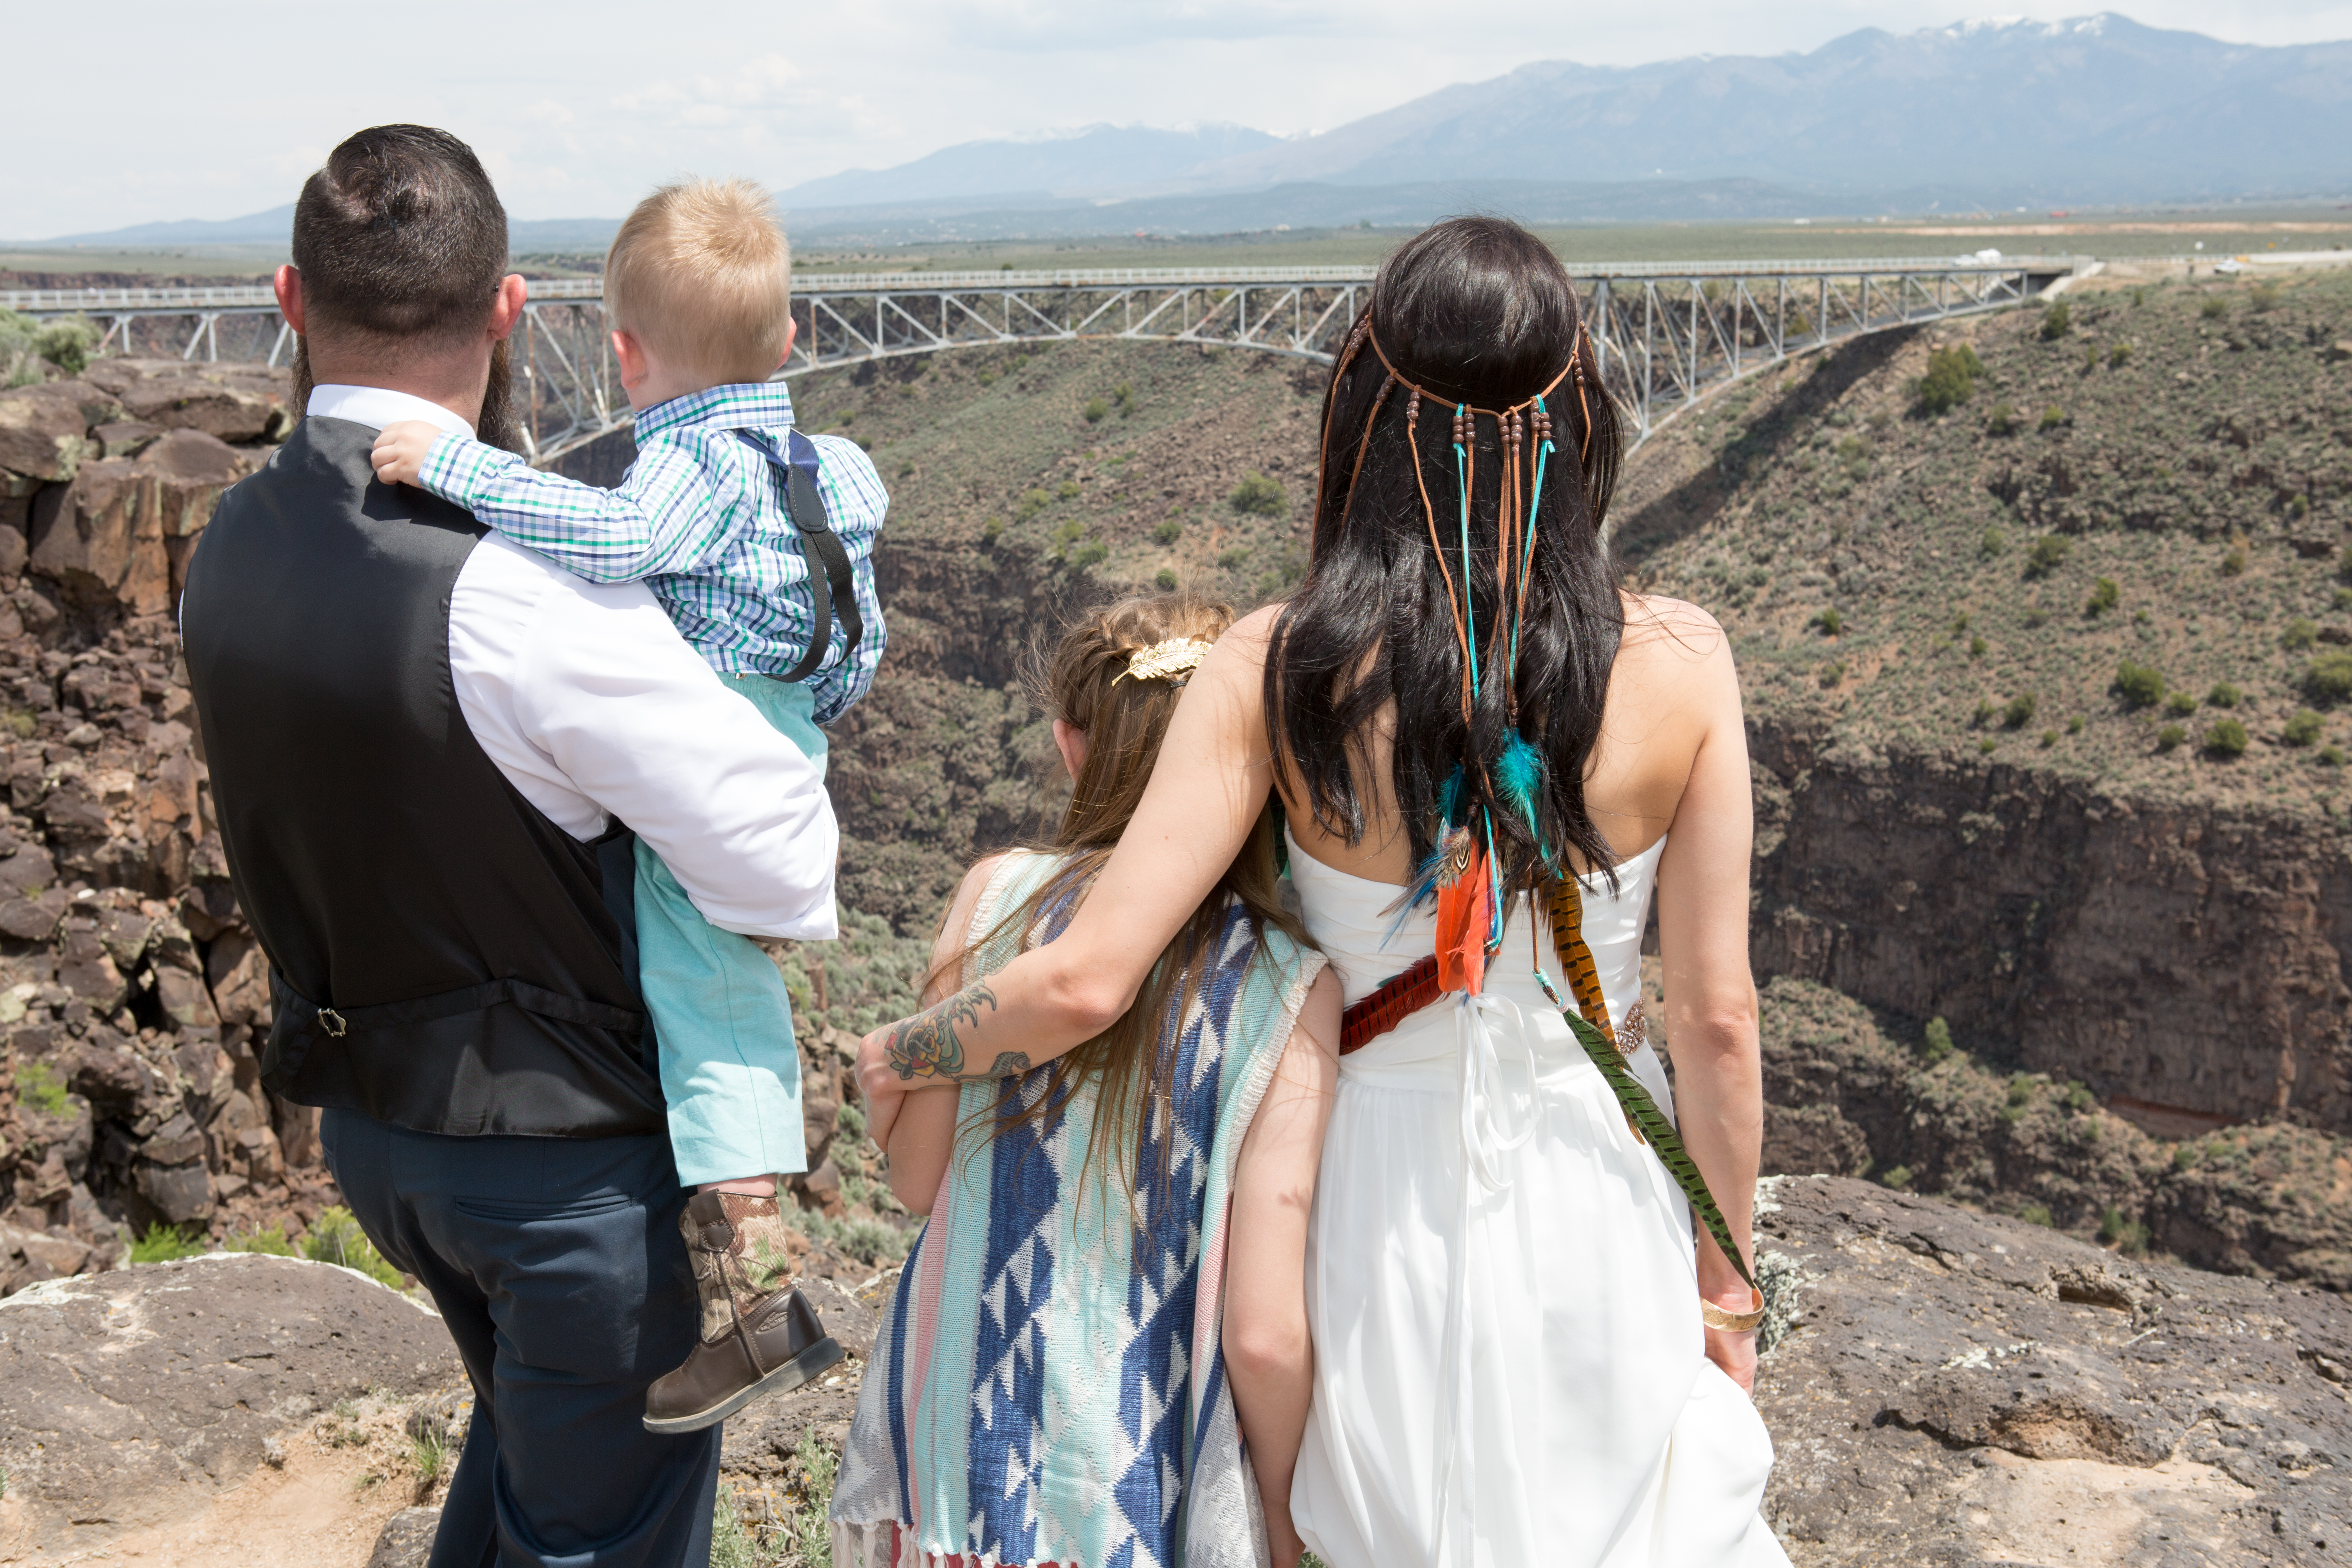 May Wedding On Rim of Rio Grande Gorge